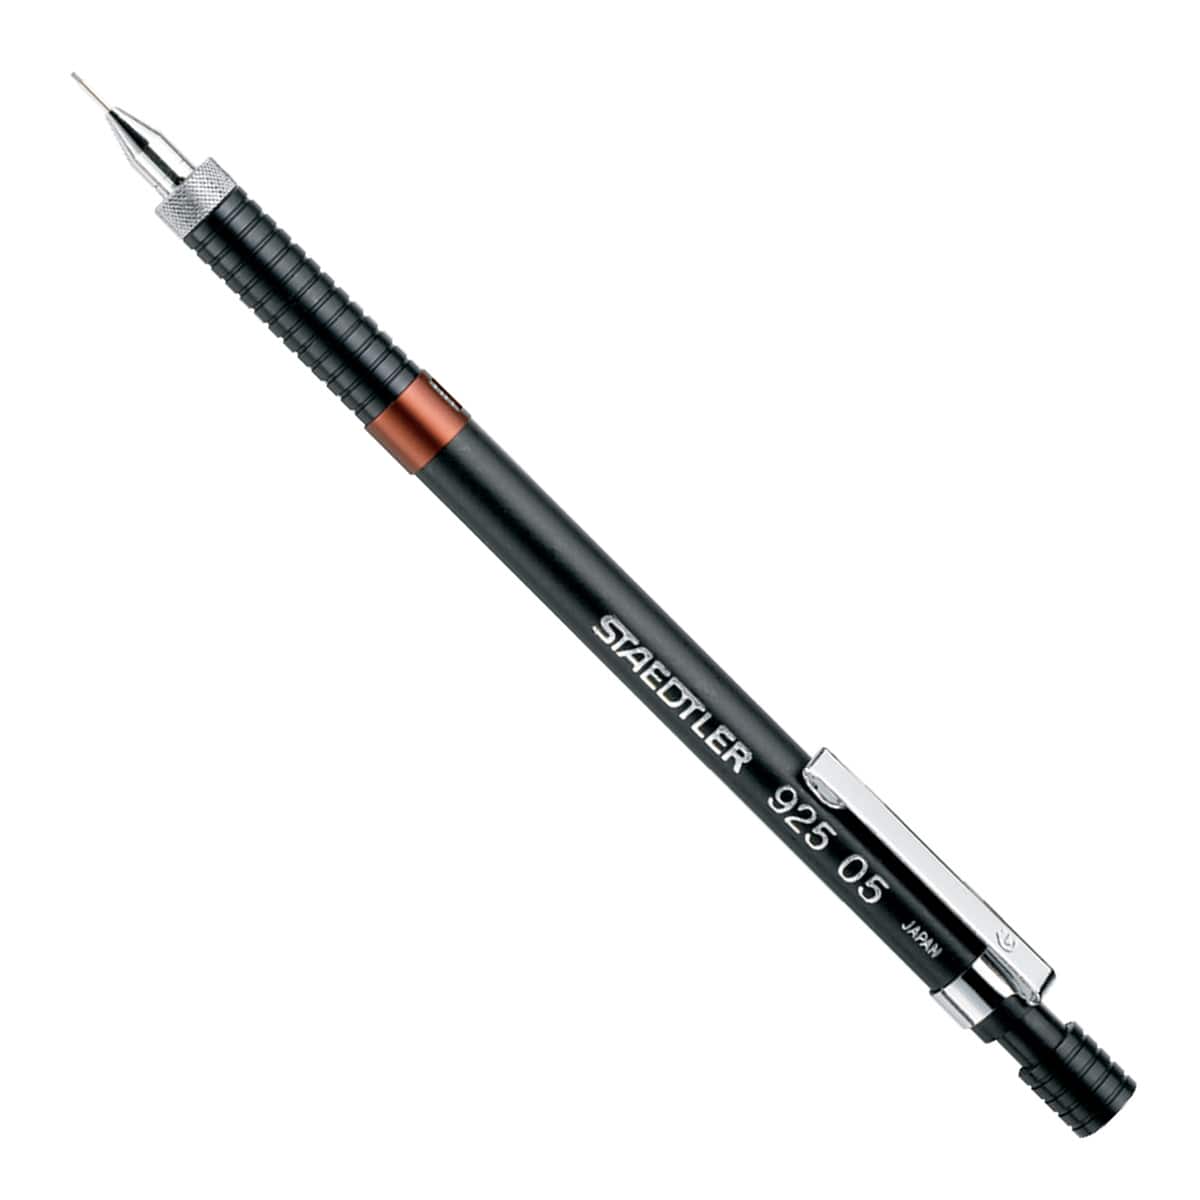 Zebra Zensations™ Colored Mechanical Pencil Set